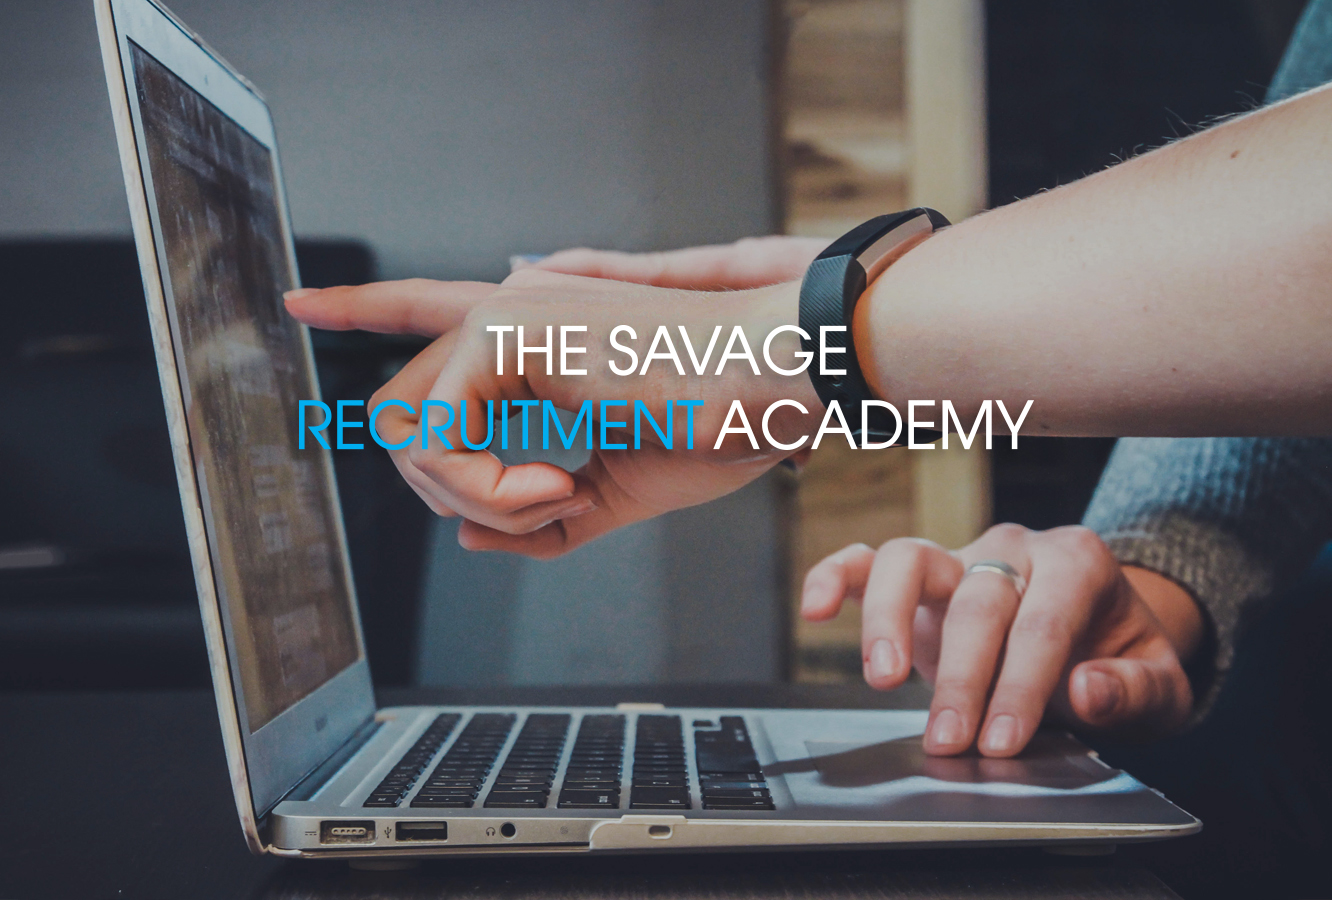 The Savage Recruitment Academy